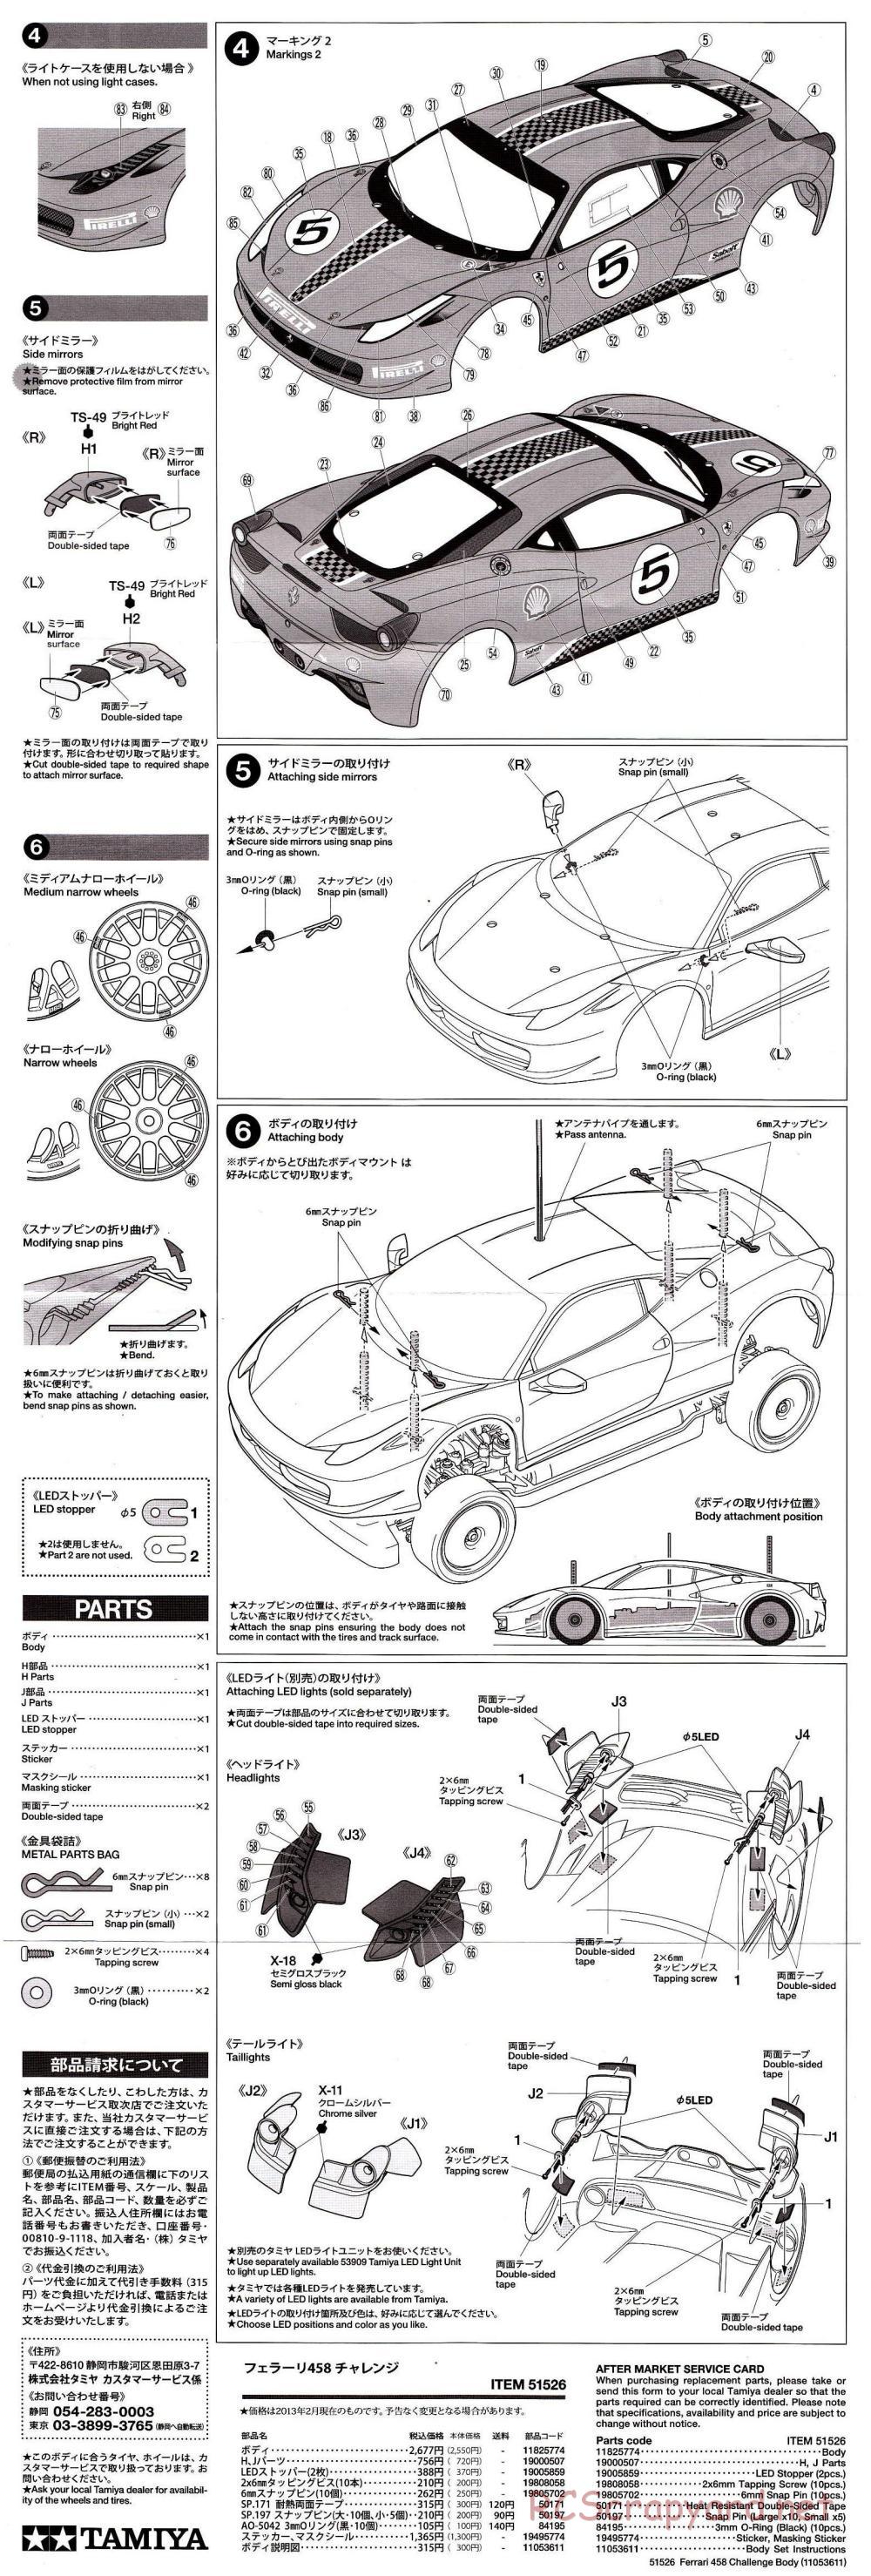 Tamiya - Ferrari 458 Challenge - TA06 Chassis - Body Manual - Page 2